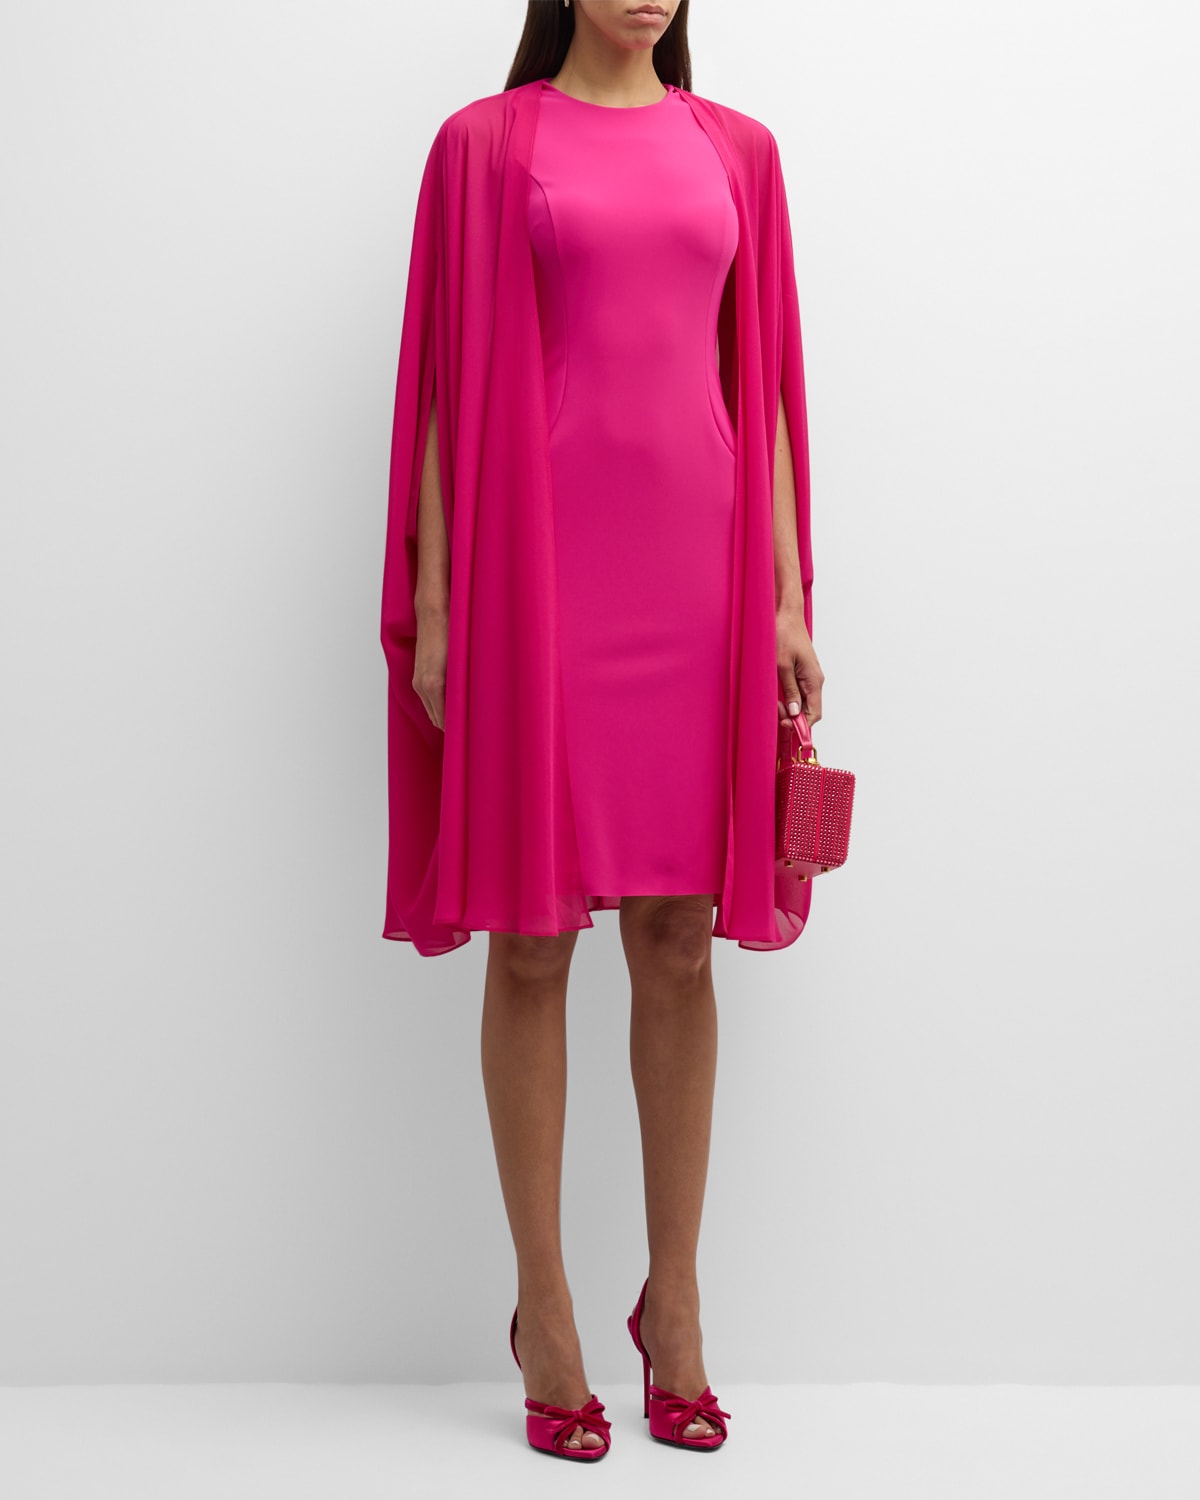 Rickie Freeman For Teri Jon Sleeveless A-line Cape Midi Dress In Hot Pink